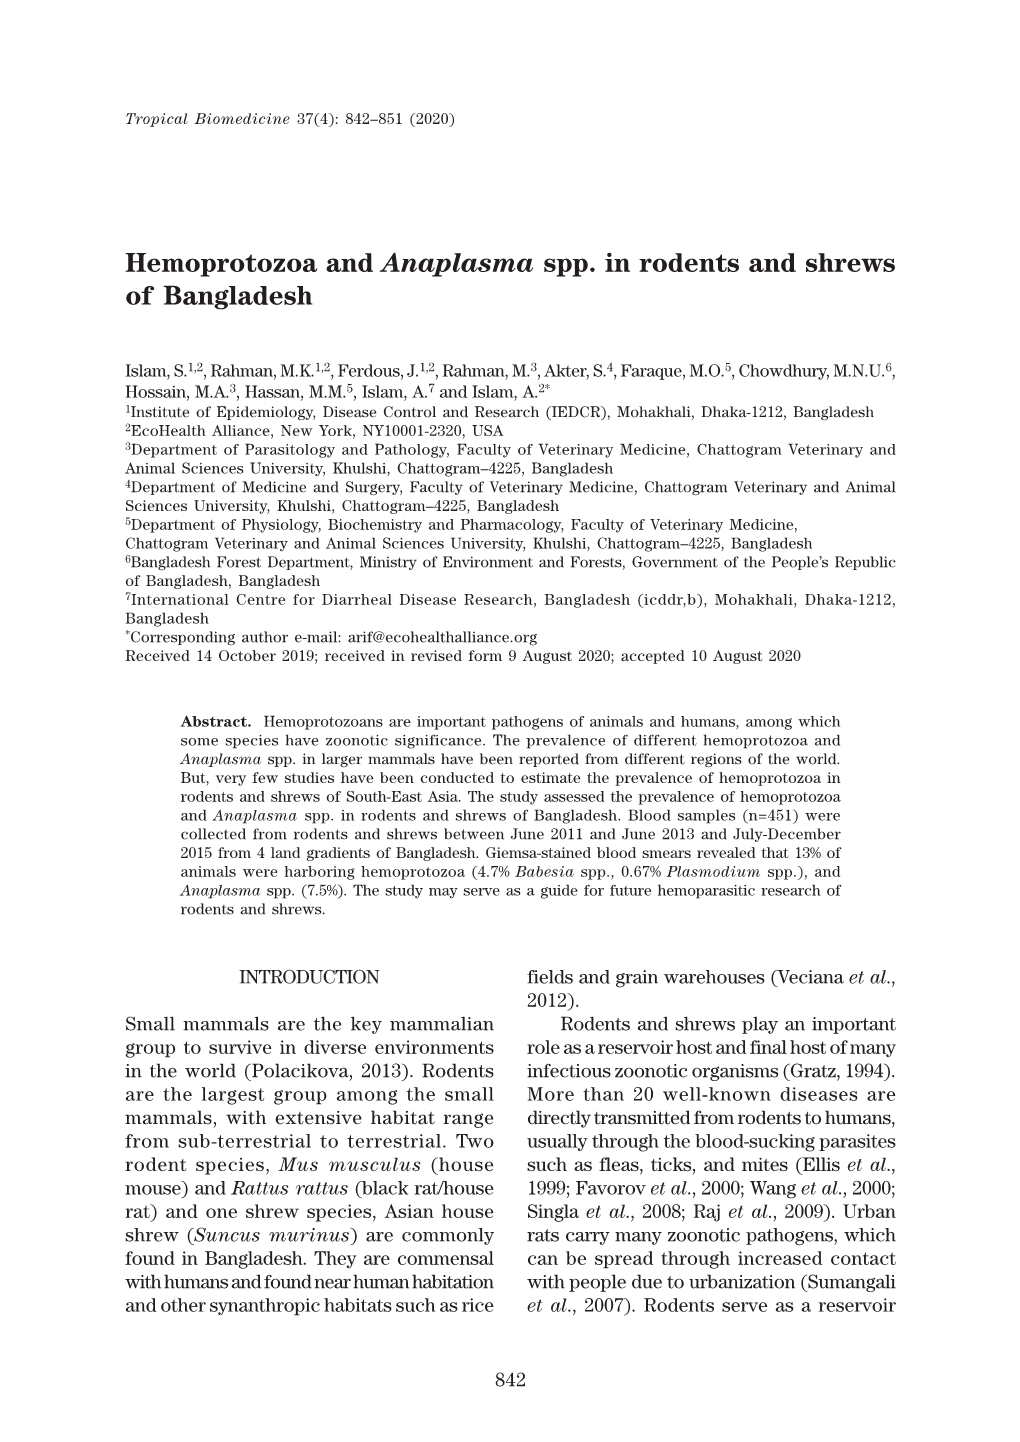 Hemoprotozoa and Anaplasma Spp. in Rodents and Shrews of Bangladesh